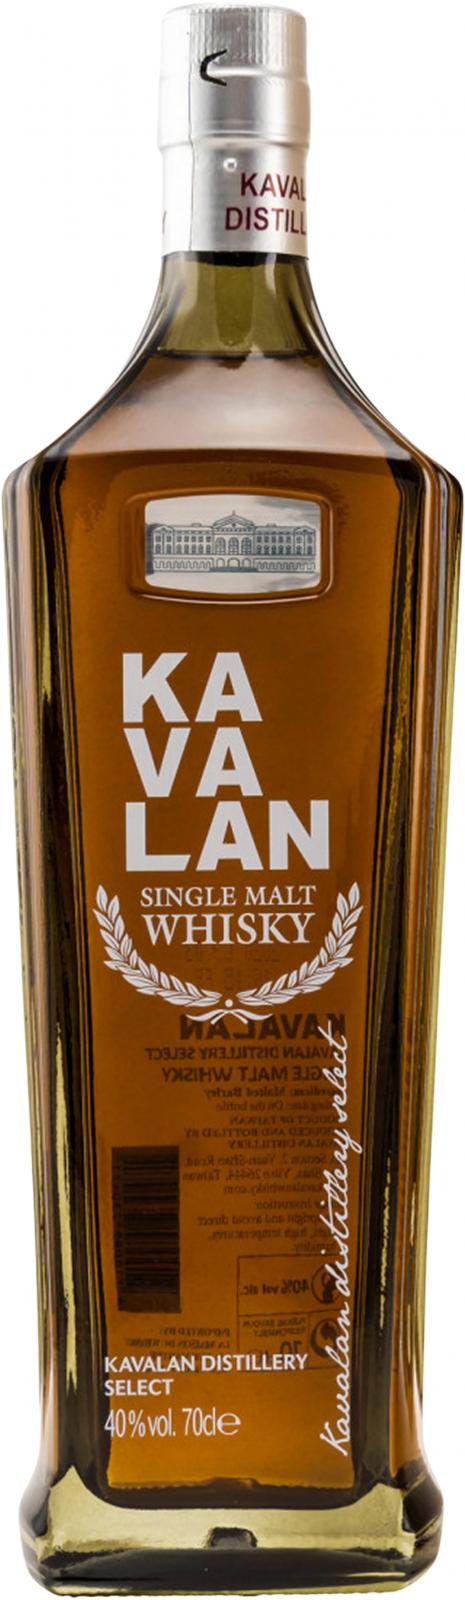 Kavalan Whisky Distillery Select Single Malt Review & Tasting Notes